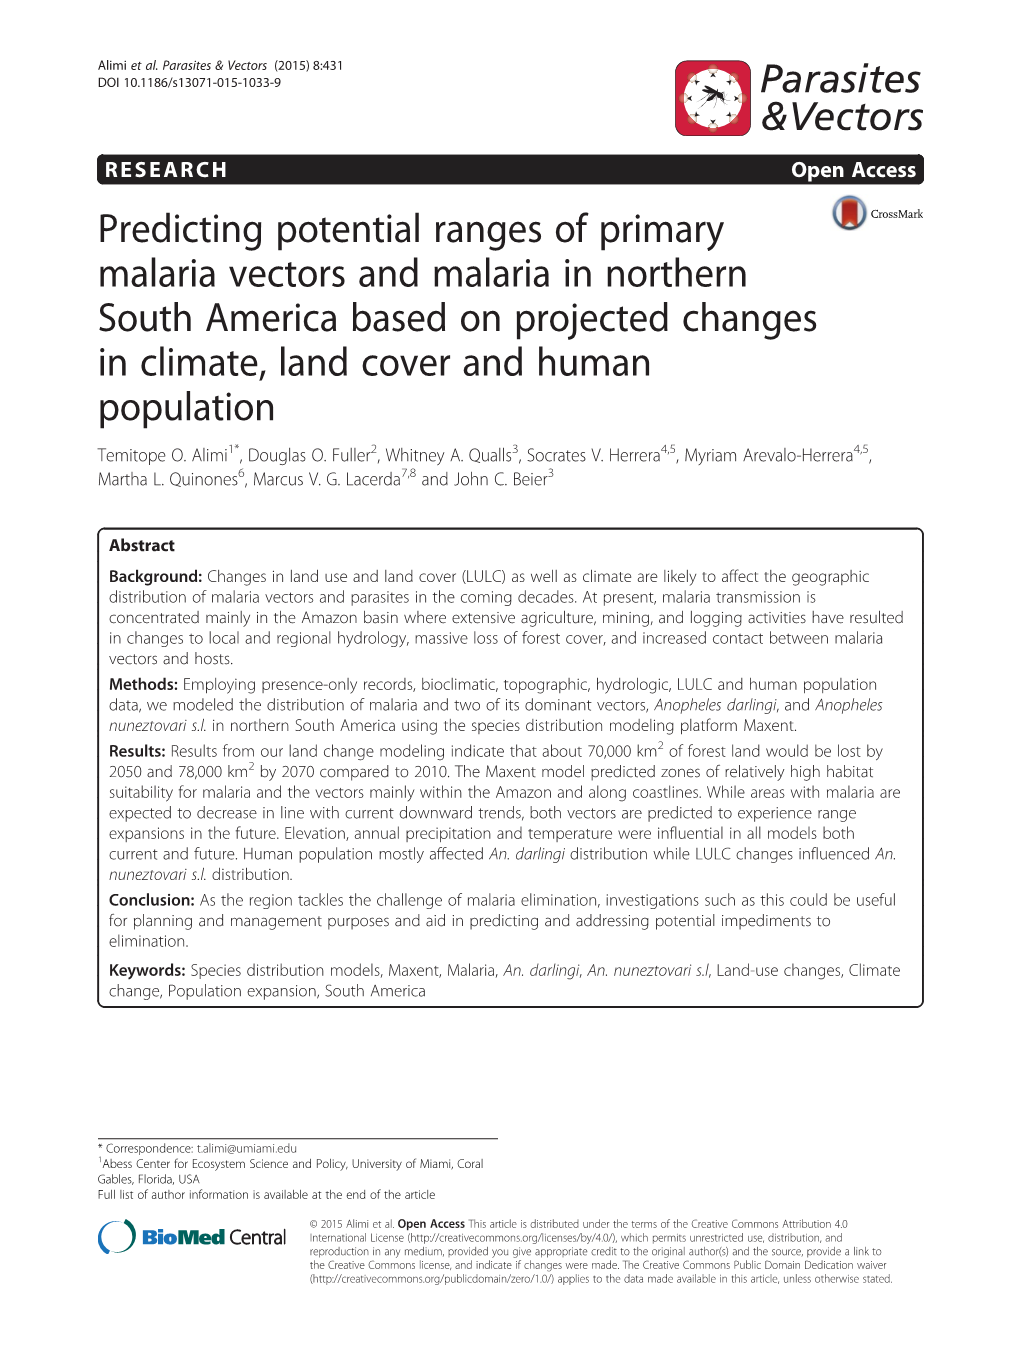 Predicting Potential Ranges of Primary Malaria Vectors and Malaria In